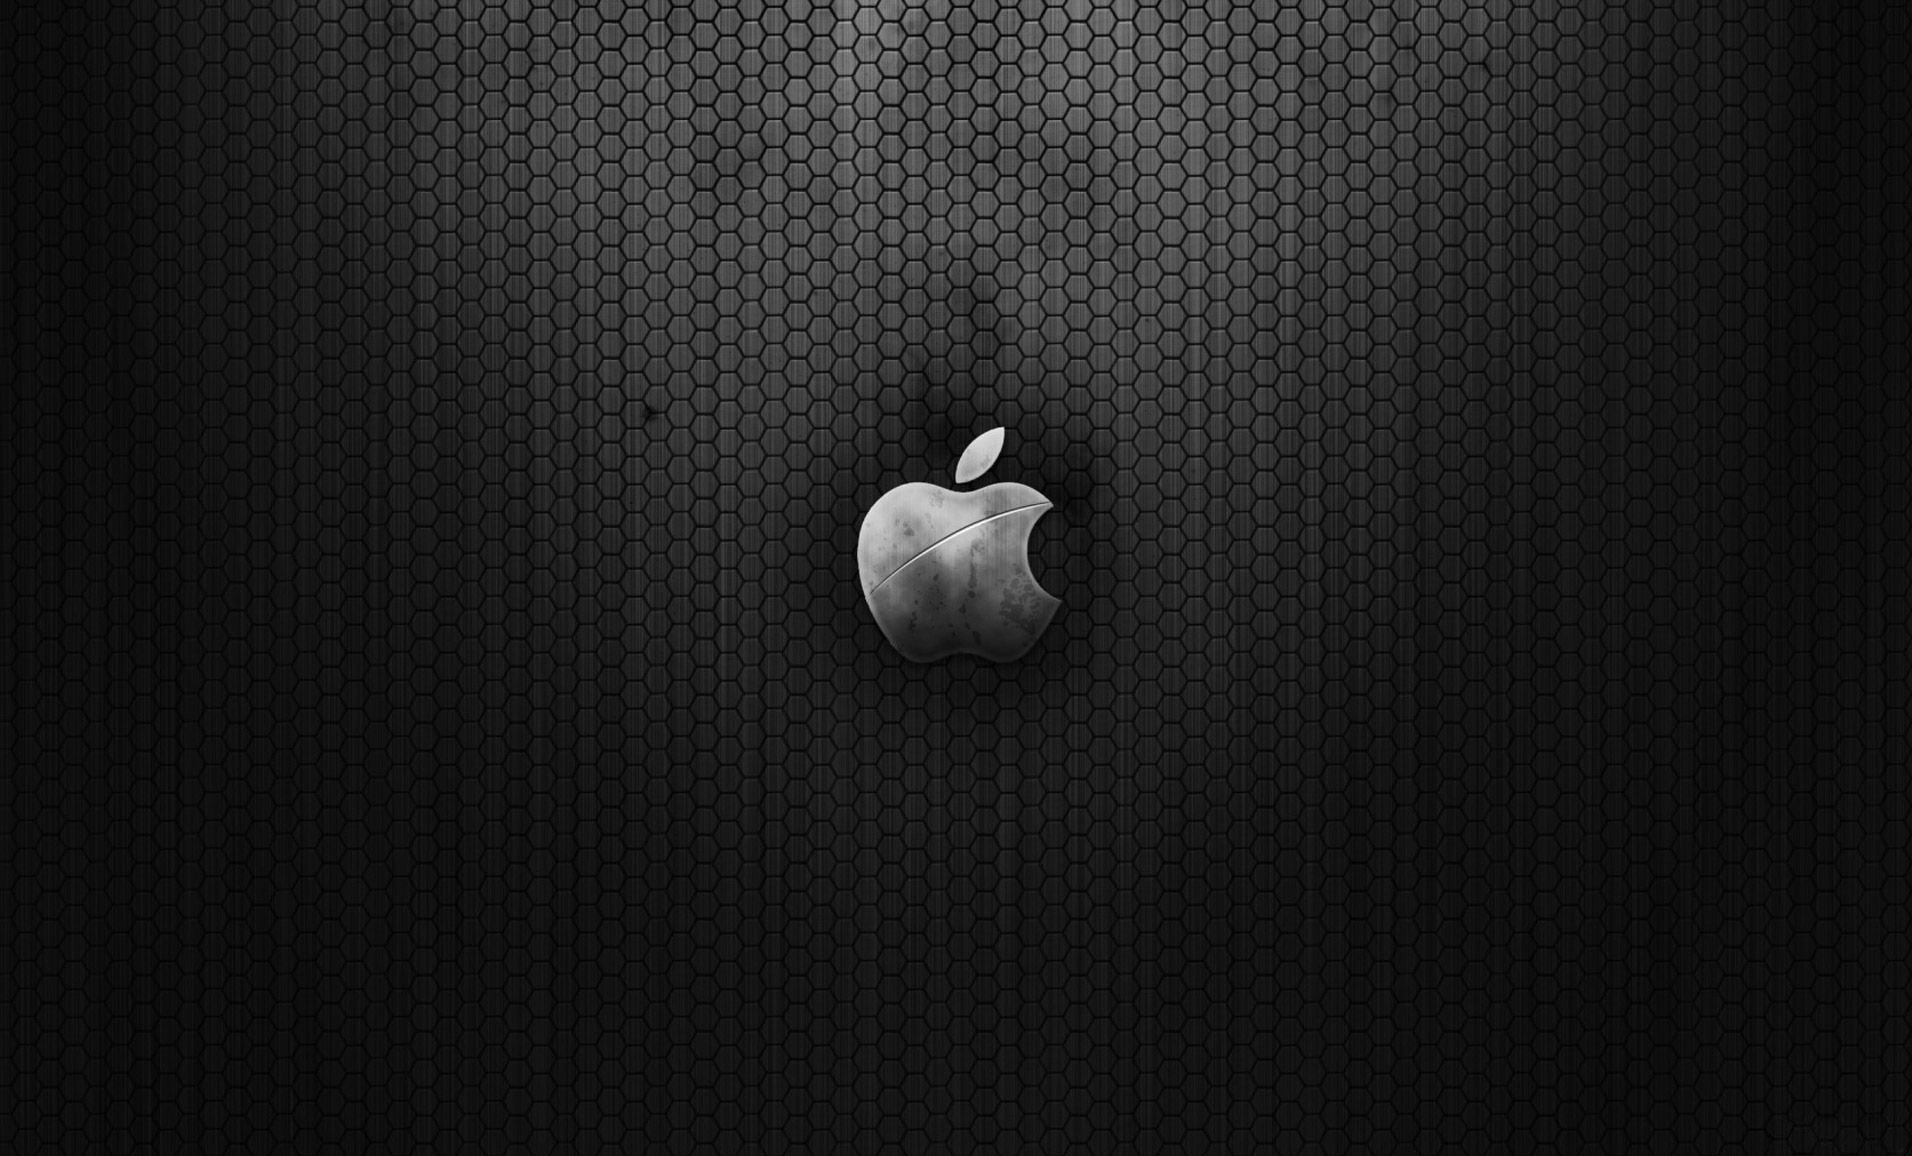 Apple desktop computer images hd wallpaper High Quality Wallpapers